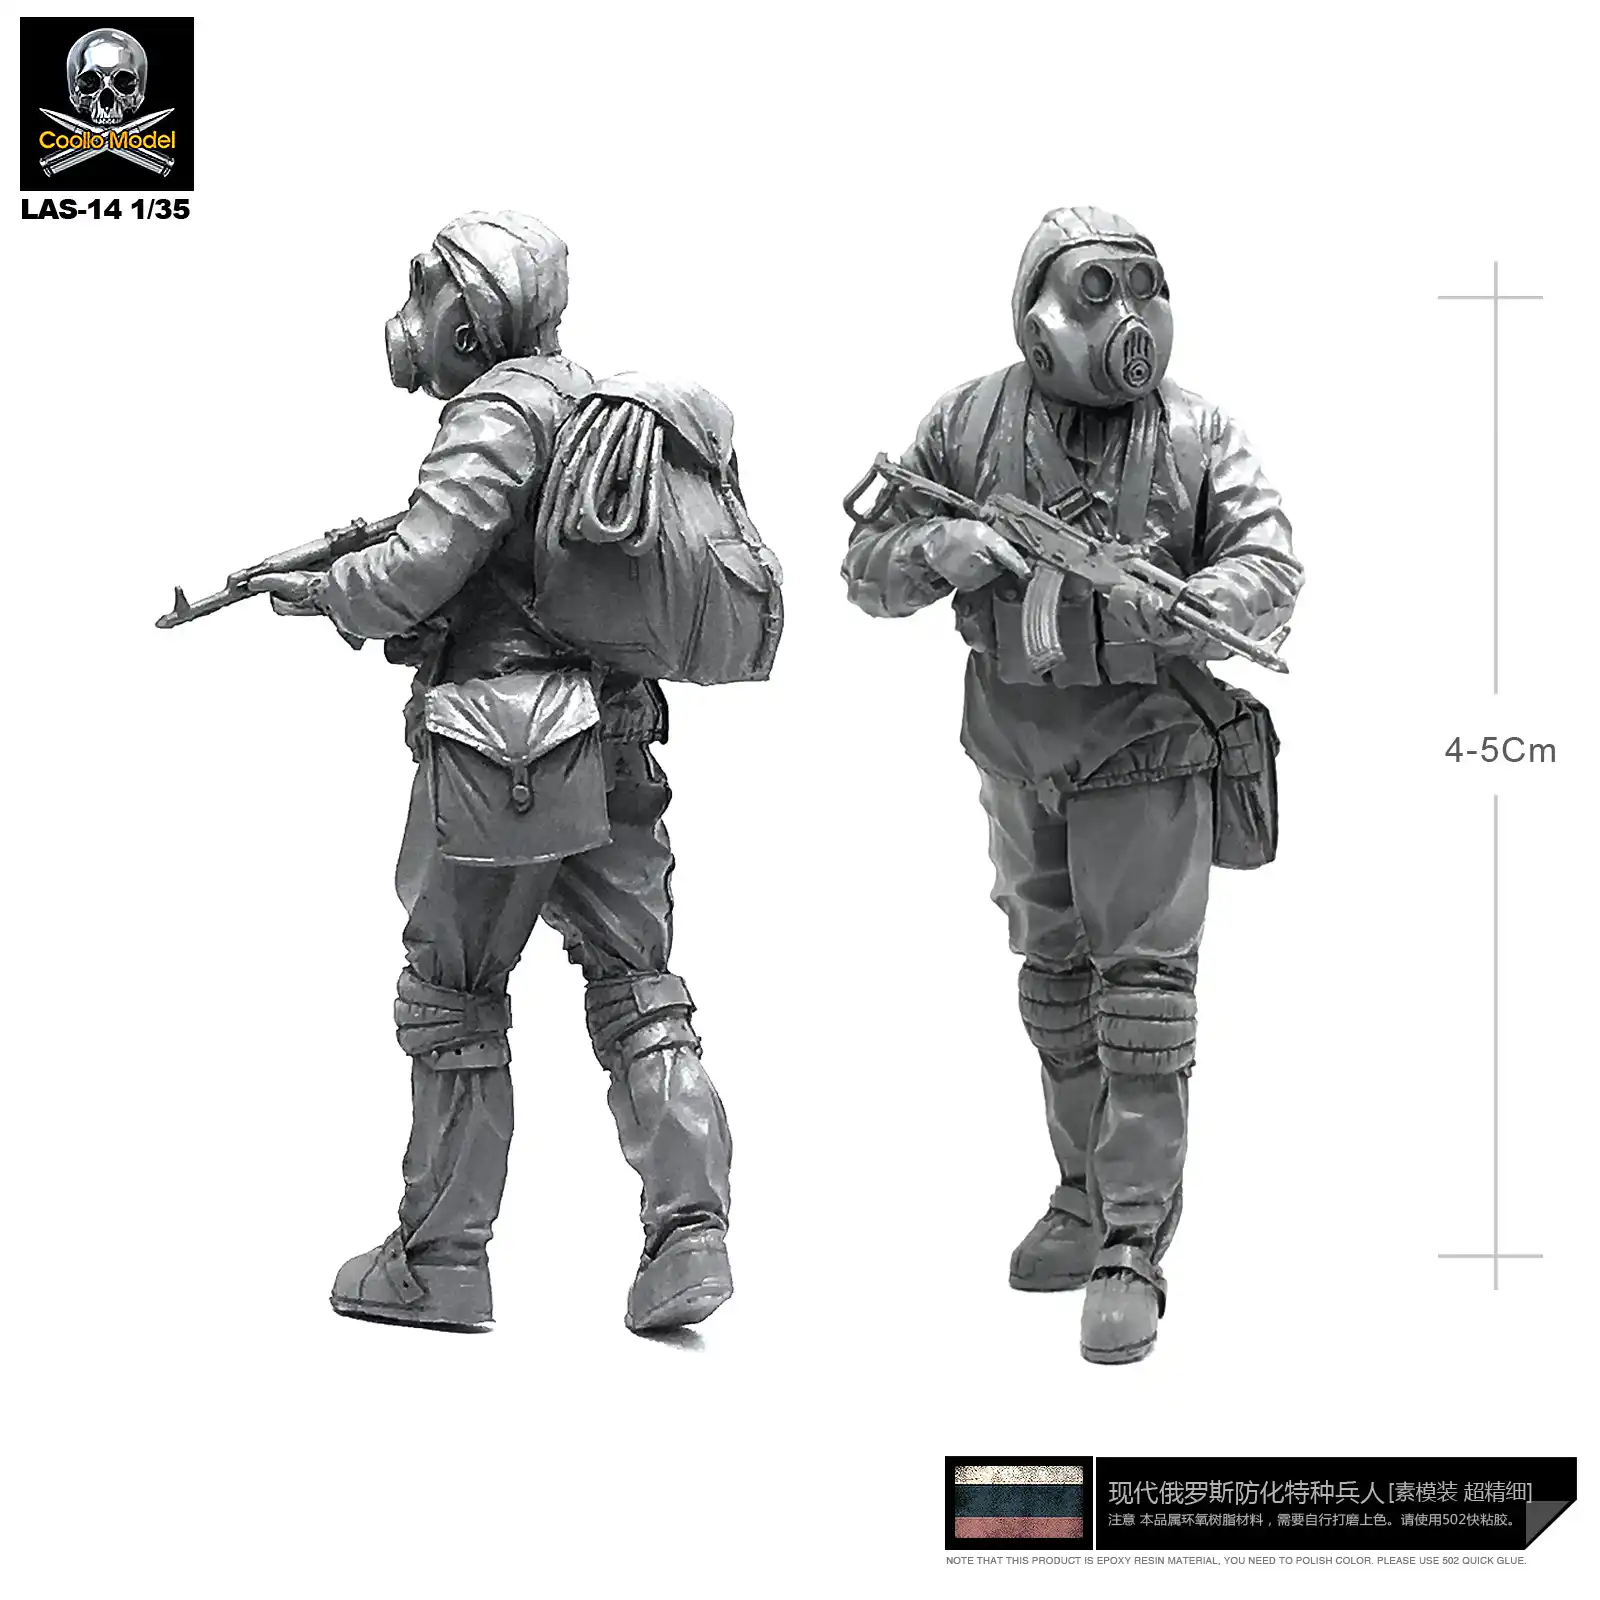 1//35 Resin Figures Model Kit /'/'Porpoise Shock Troopers/'/' Sci-Fi 4 Figures